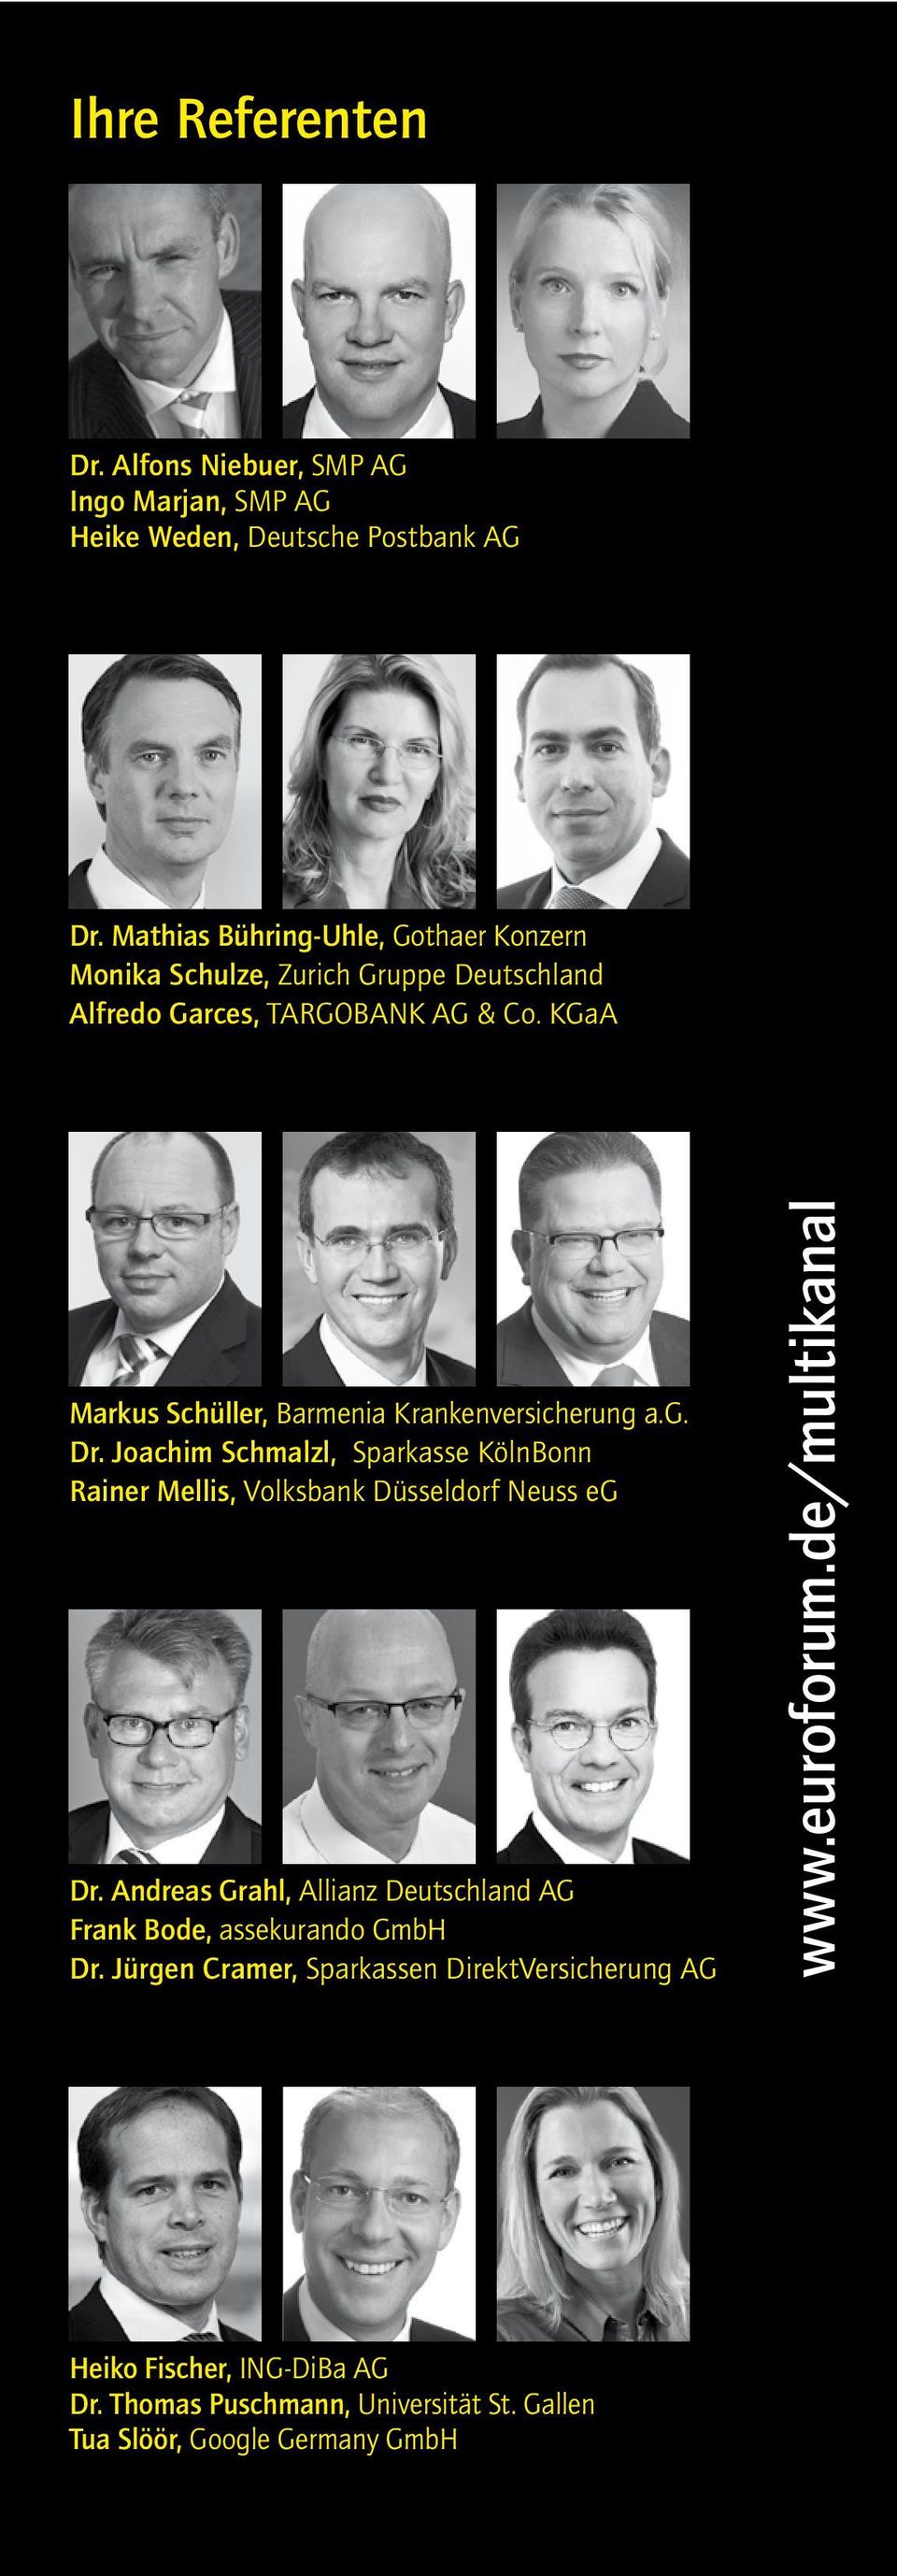 KGaA Markus Schüller, Barmenia Krankenversicherung a.g. Dr. Joachim Schmalzl, Sparkasse KölnBonn Rainer Mellis, Volksbank Düsseldorf Neuss eg Dr.